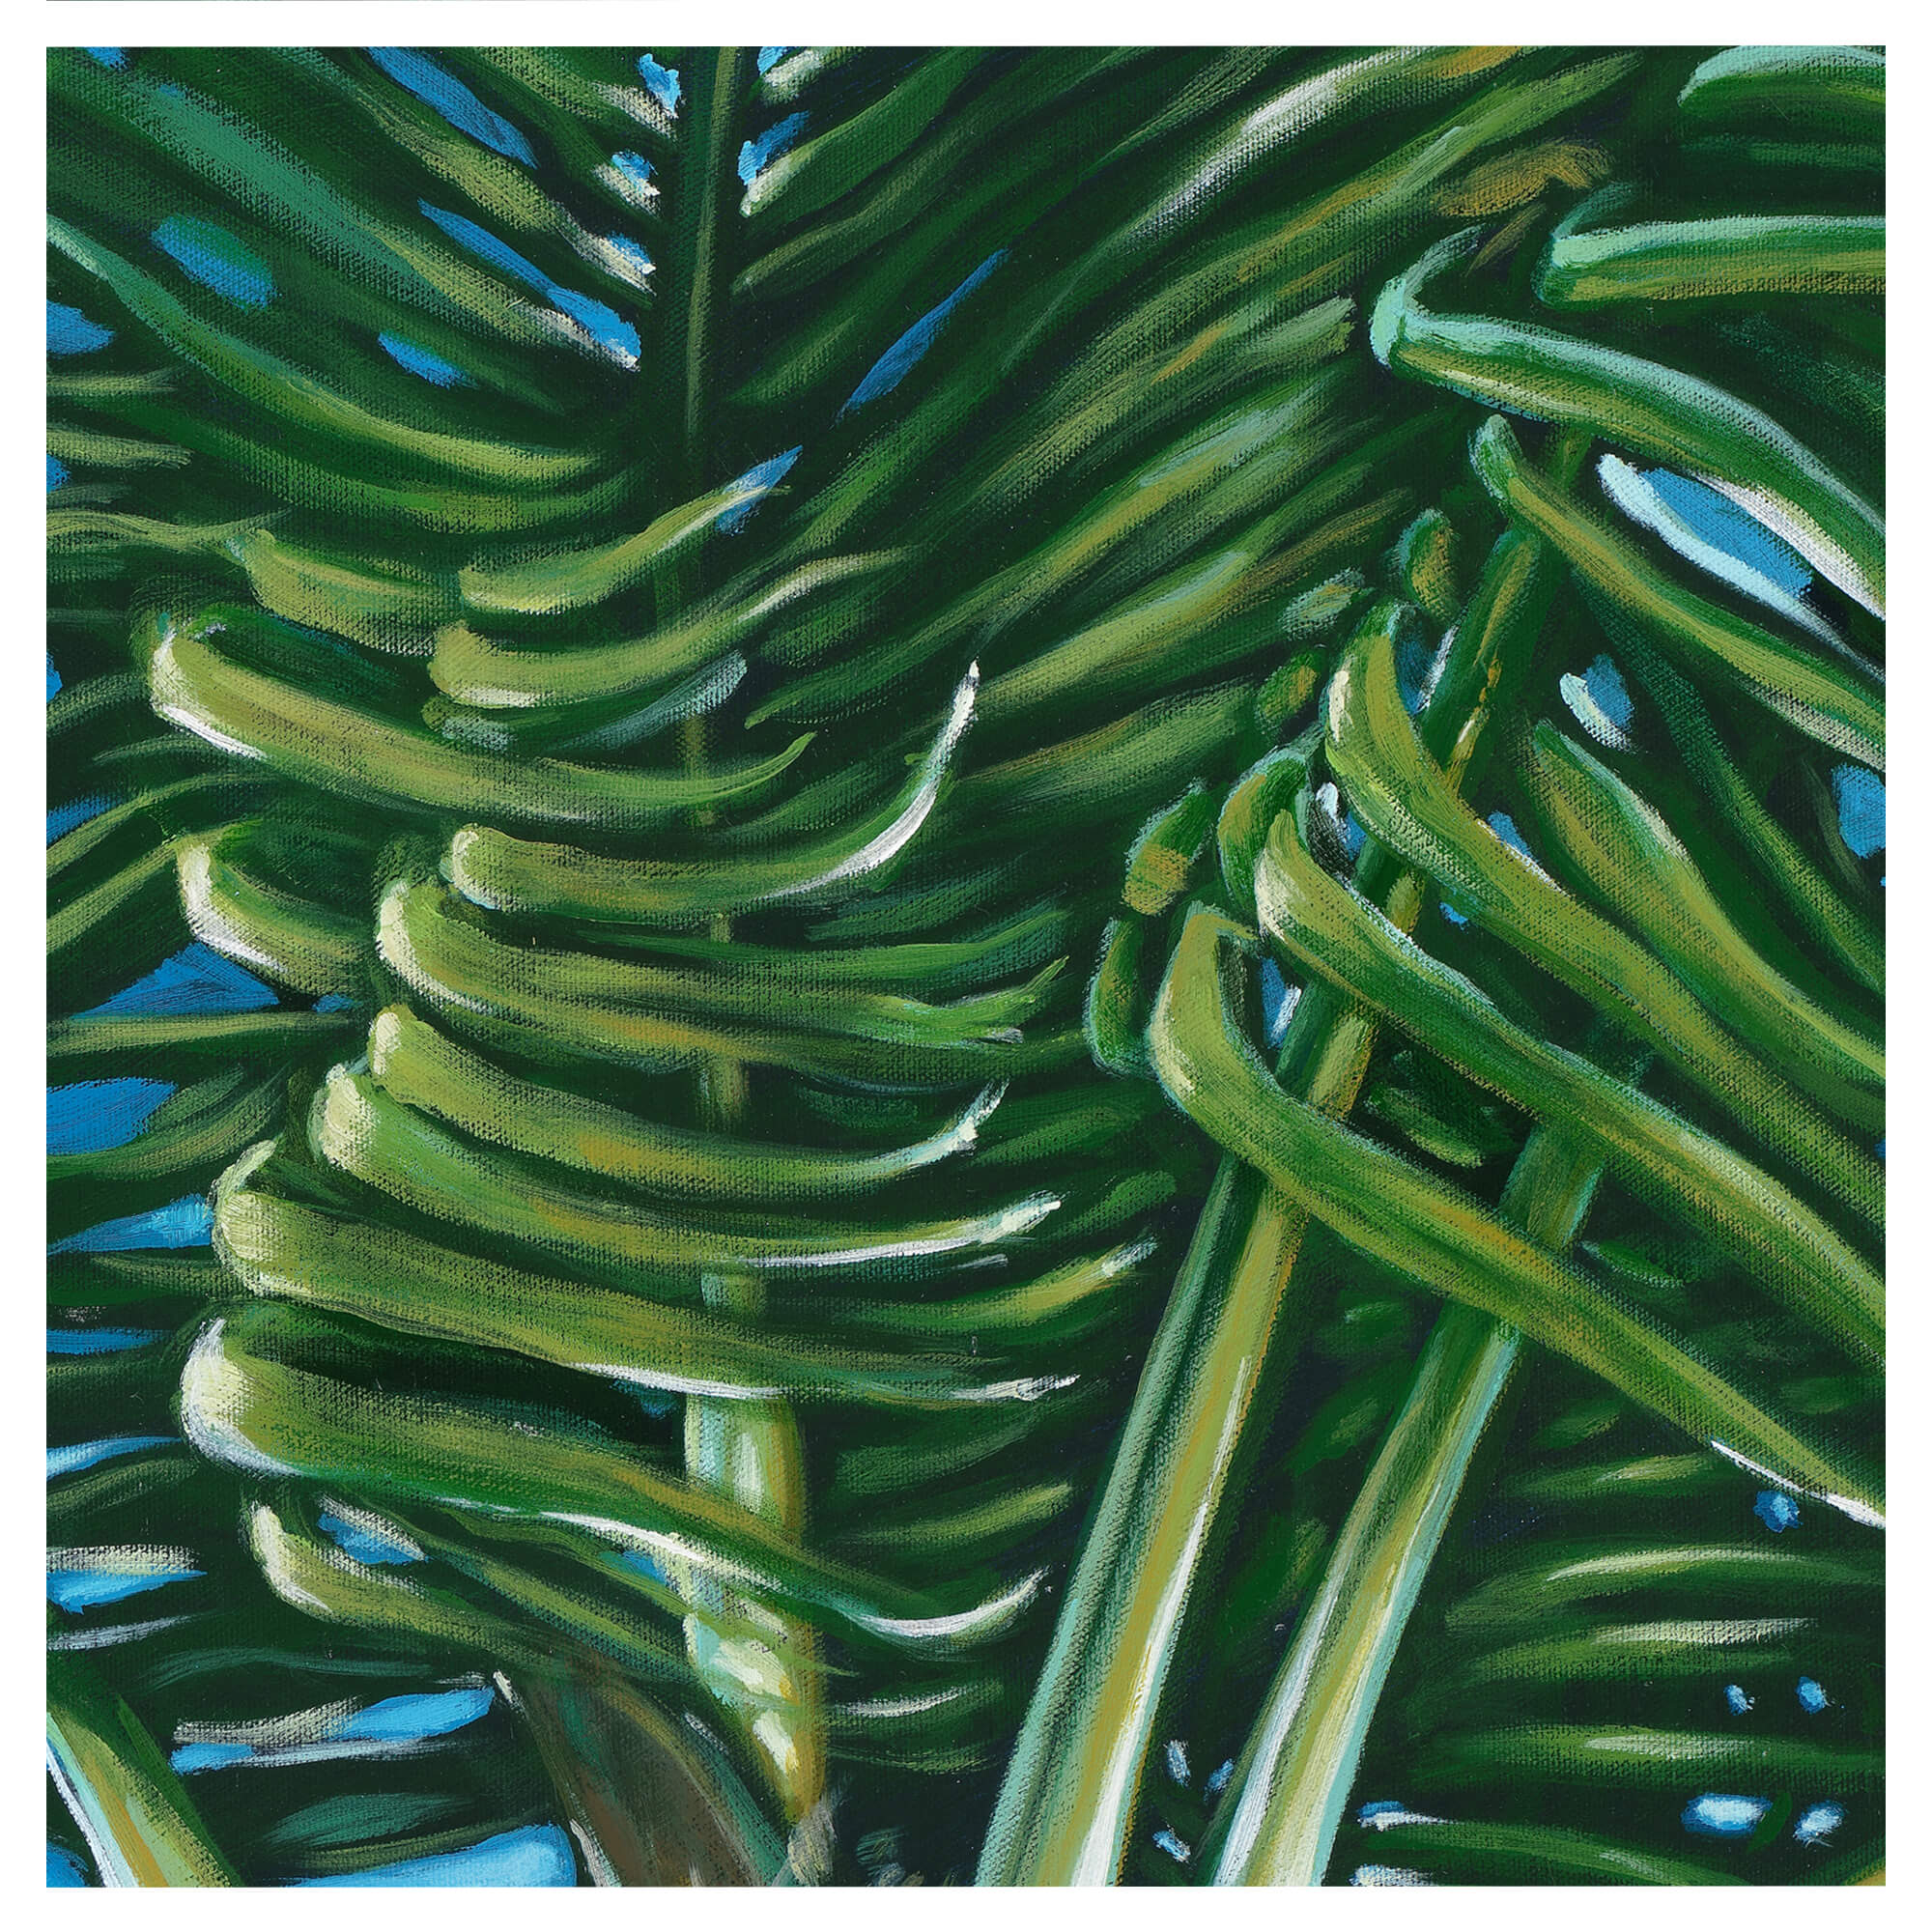 An illustration featuring palm tree leaves by hawaii artist Kristi Petosa